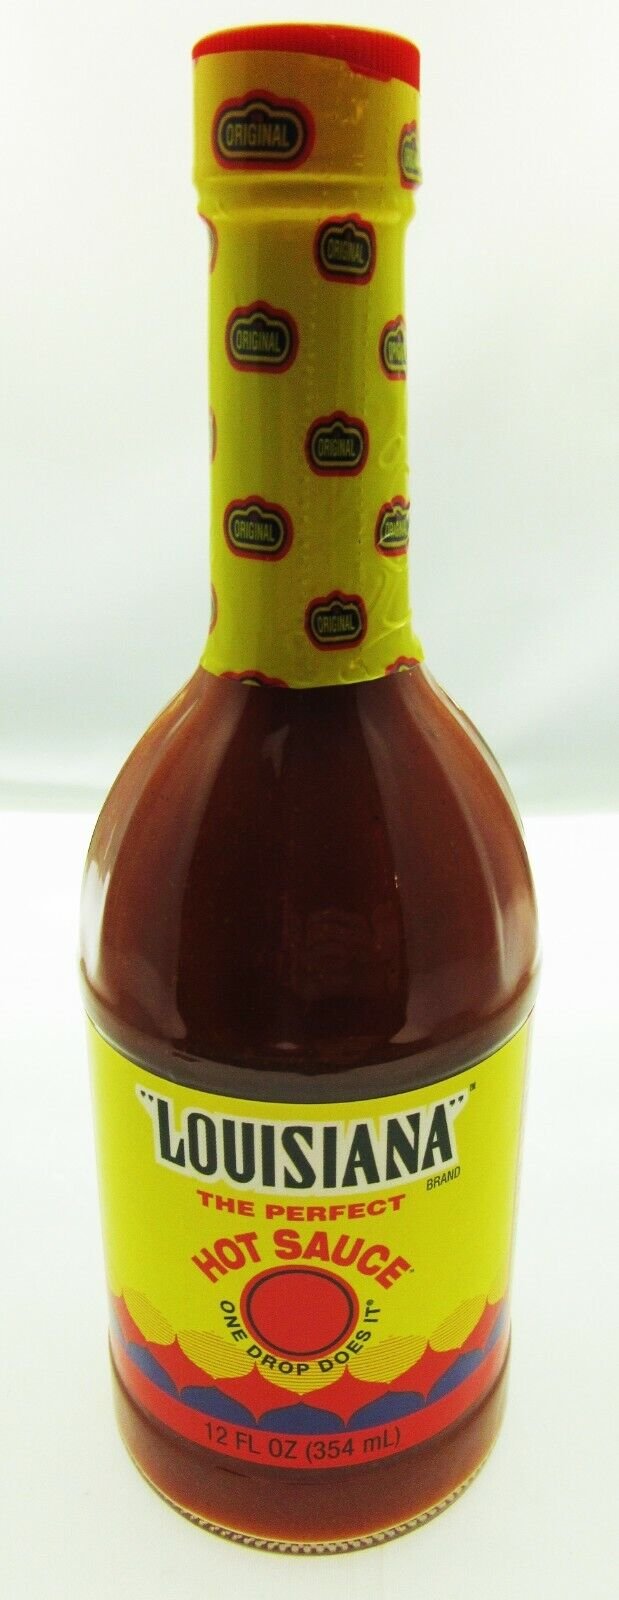 Louisiana Brand - Louisiana Brand, Hot Sauce, Original (12 fl oz), Shop